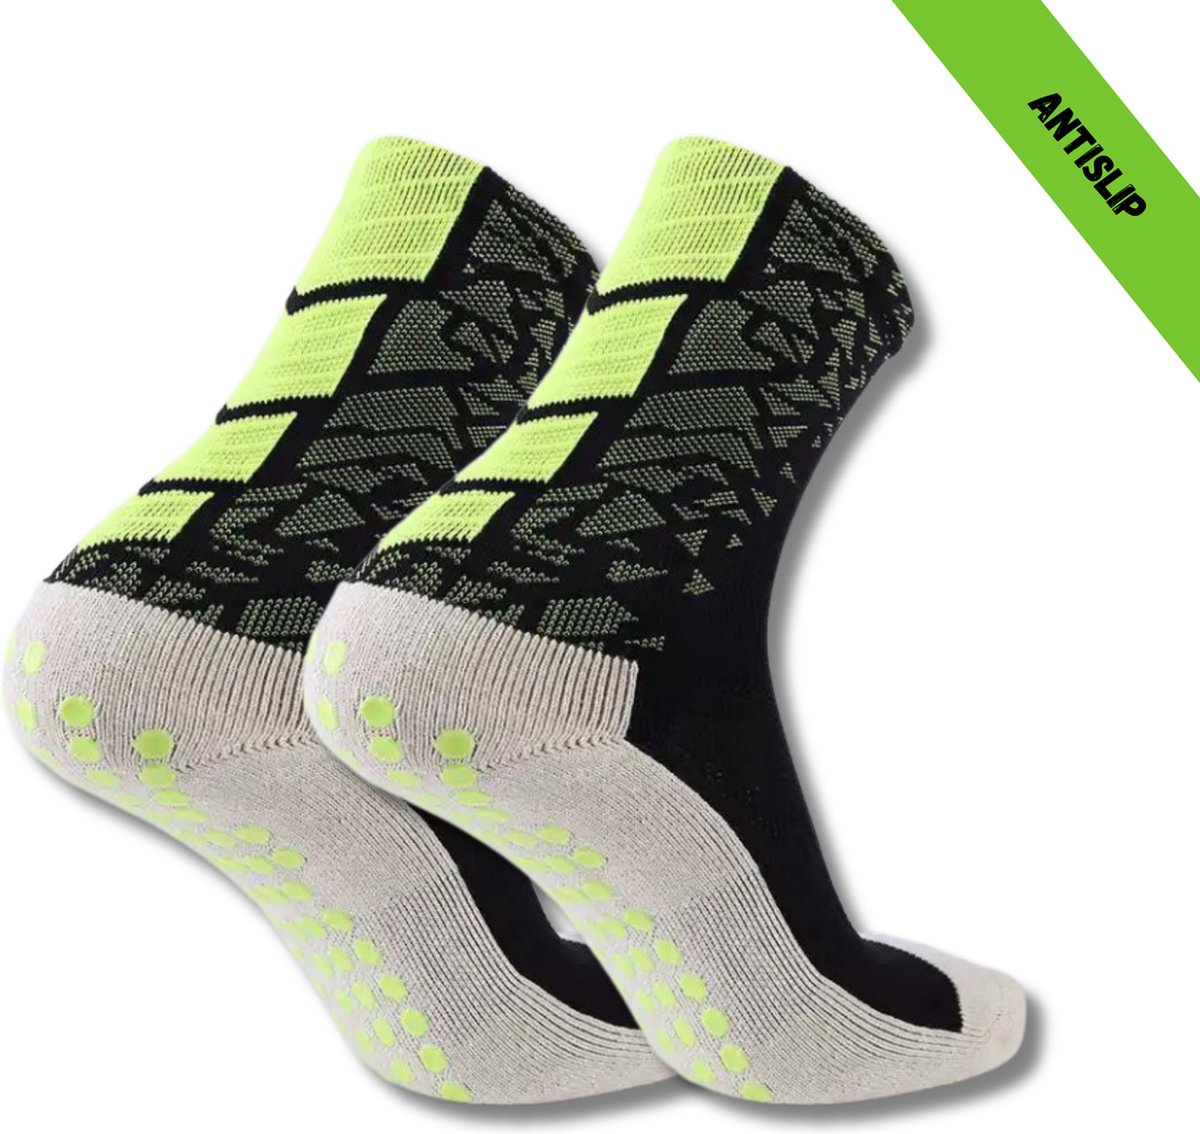 Gripsokken - Sportsokken - Gripsokken Voetbal - Gripsokken Voetbal Zwart/Geel - Grip Socks - Pilates Sokken - Yoga Sokken - Anti Blaren - One Size - Compressie